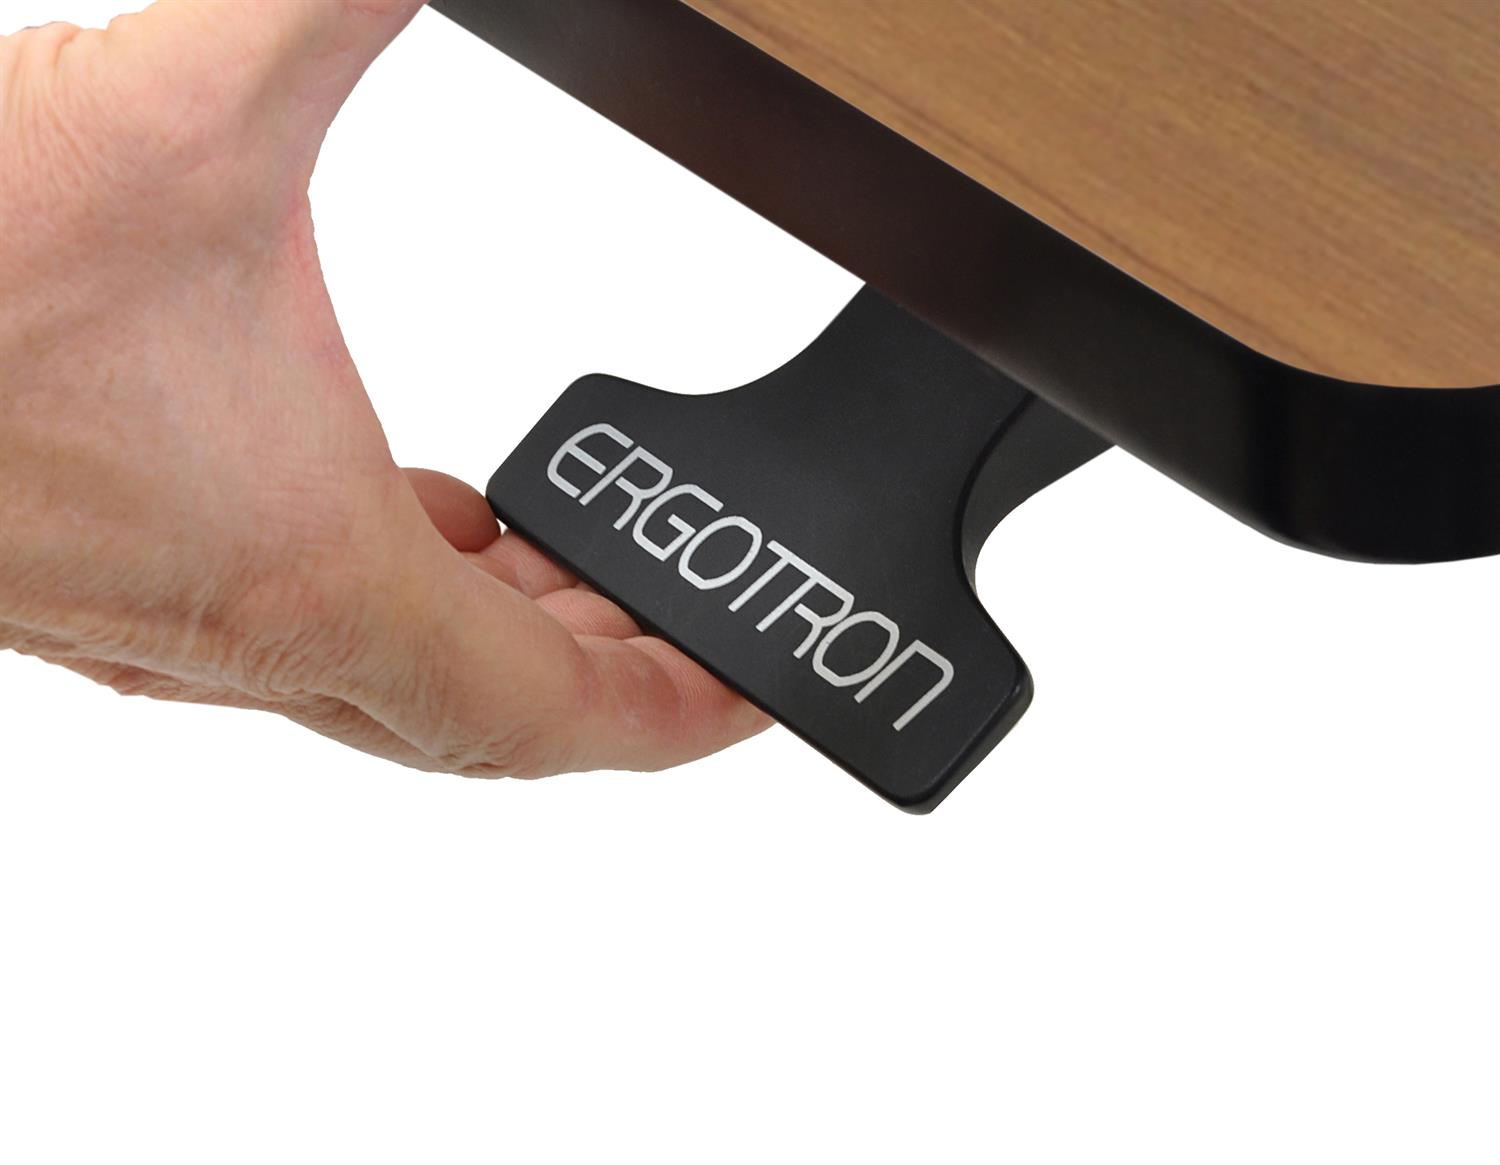 Ergotron WorkFit-D Sit-Stand Desk